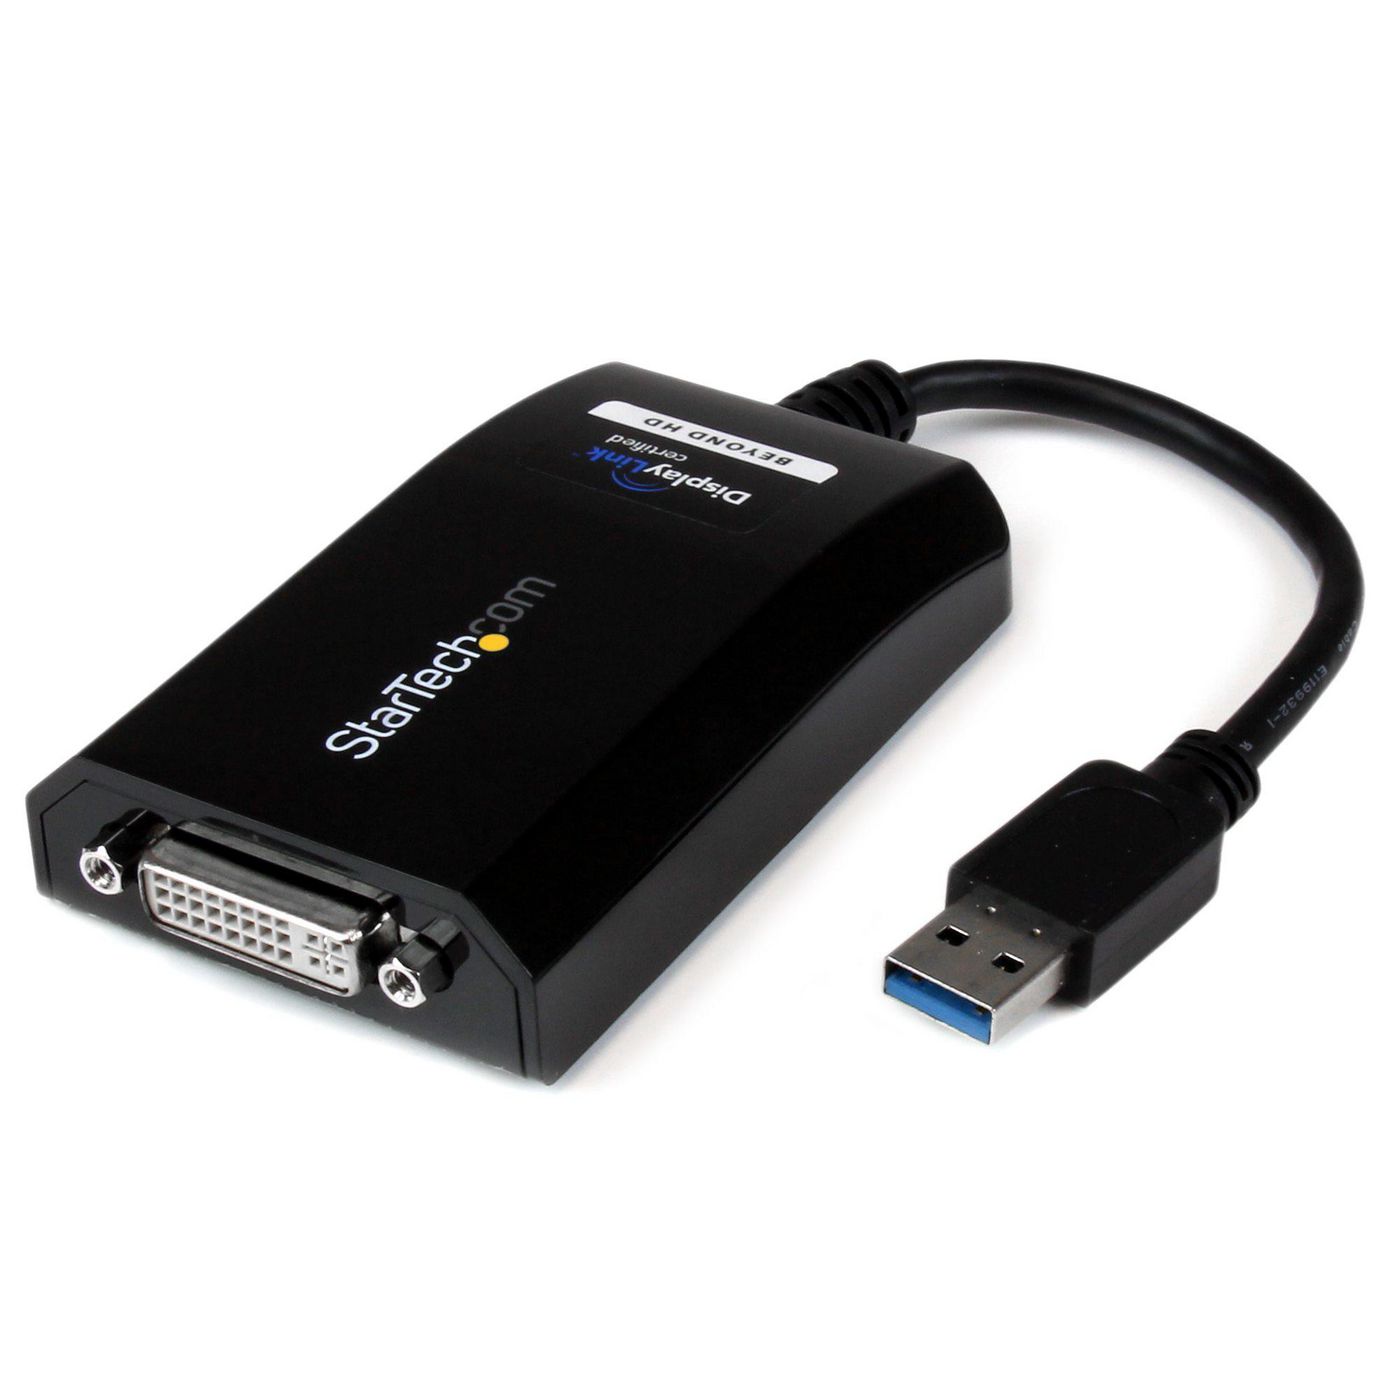 STARTECH.COM USB 3.0 auf DVI / VGA Video Adapter - Externe Multi Monitor Grafikkarte (Stecker / Buch